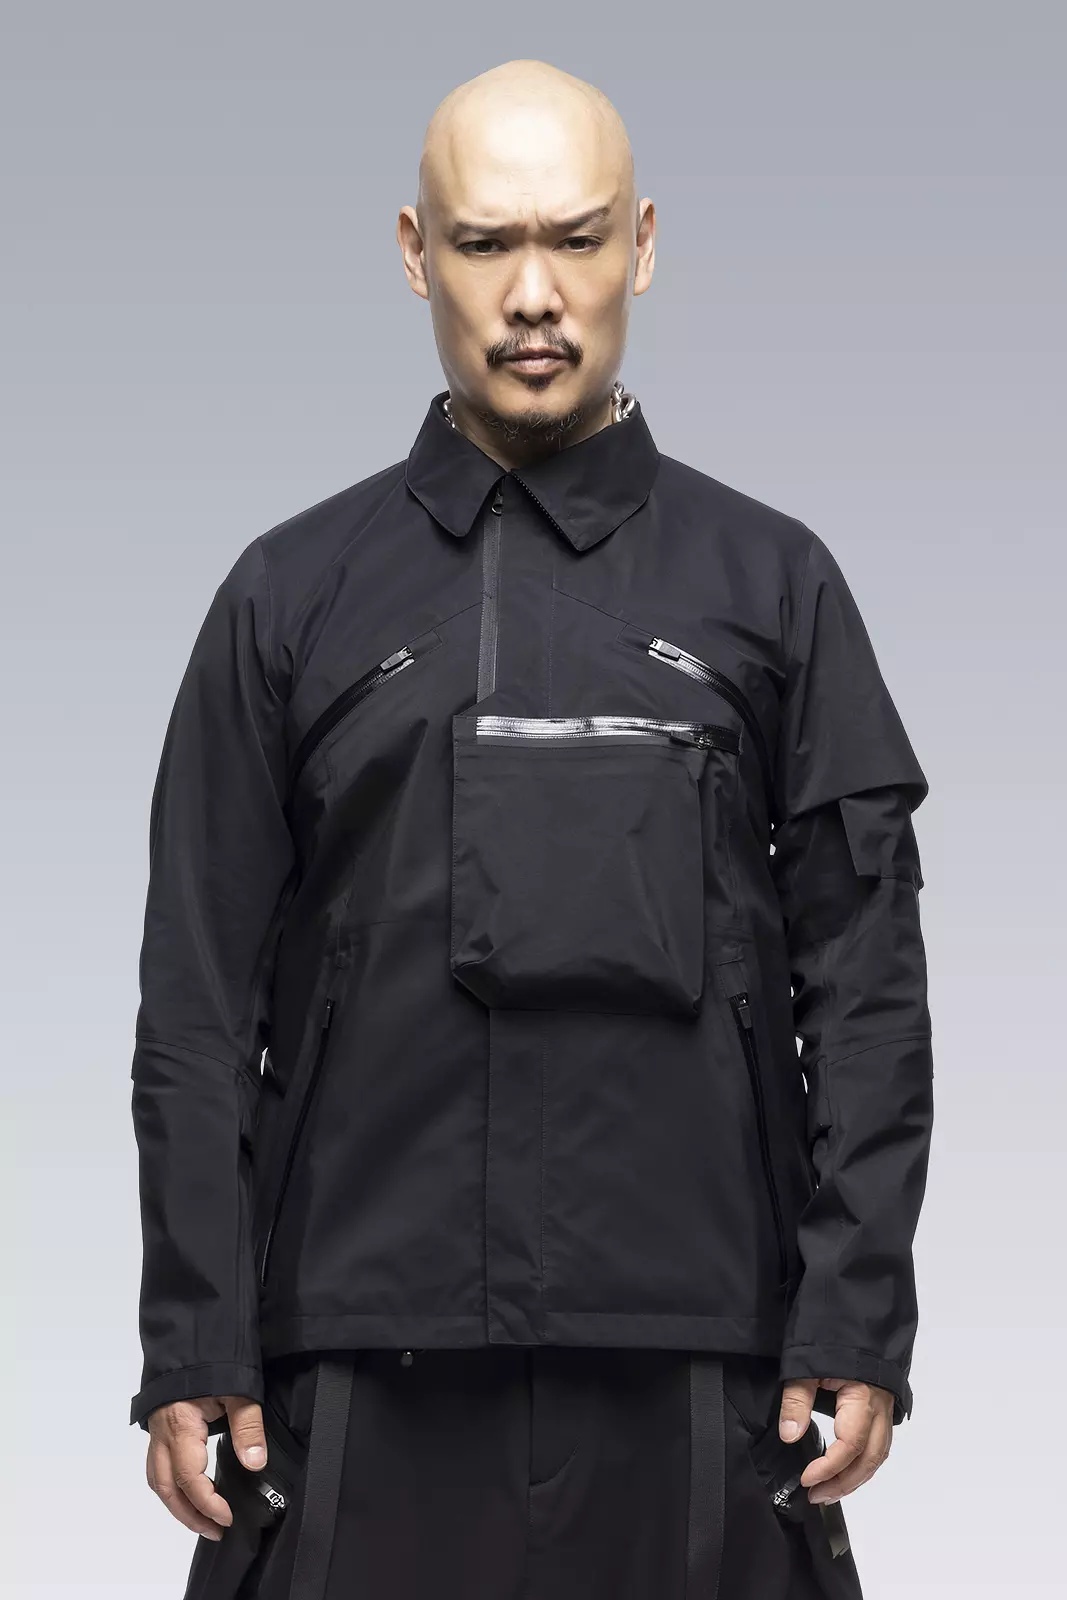 J1A-GTKR-BKS KR EX 3L Gore-Tex® Pro Interops Jacket Black with size 5 WR zippers in gloss black - 10